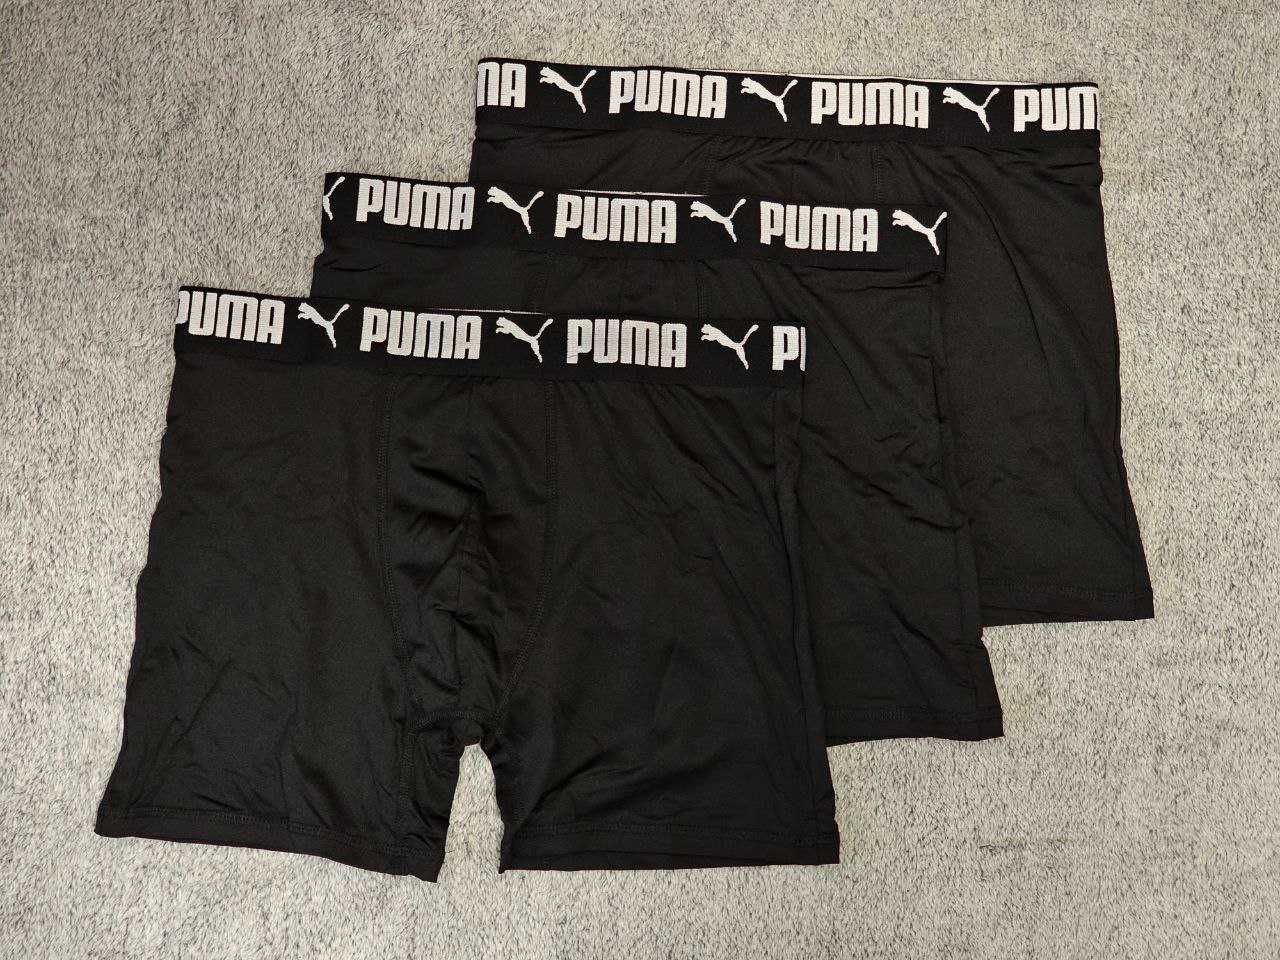 Мужские трусы-боксеры Puma (3 Pack) Размеры М,L,XL